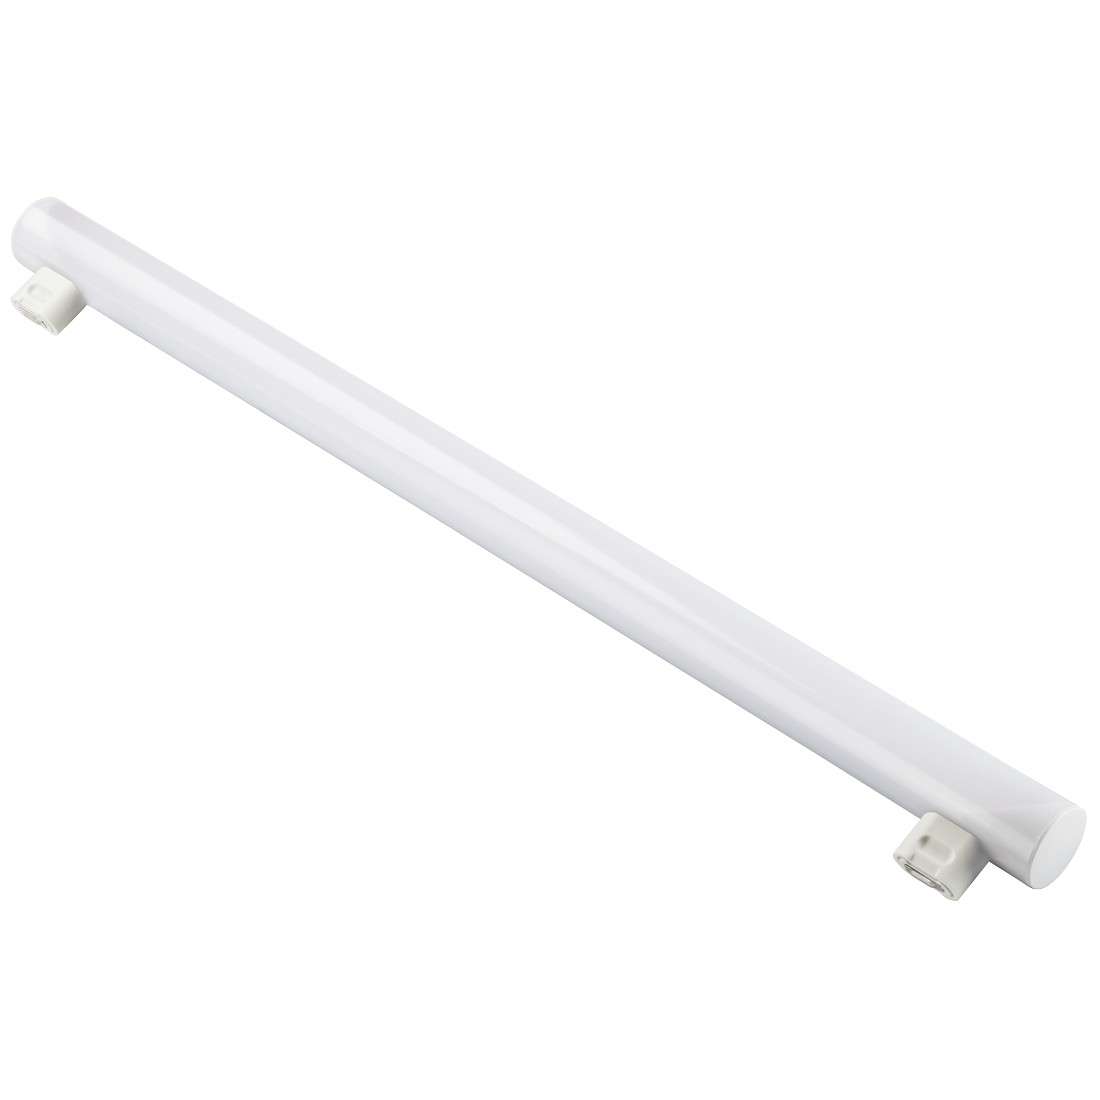 LED-Lampe, S14s, 640lm ersetzt 50W, Linien-Lampe, 50 cm, Warmweiß